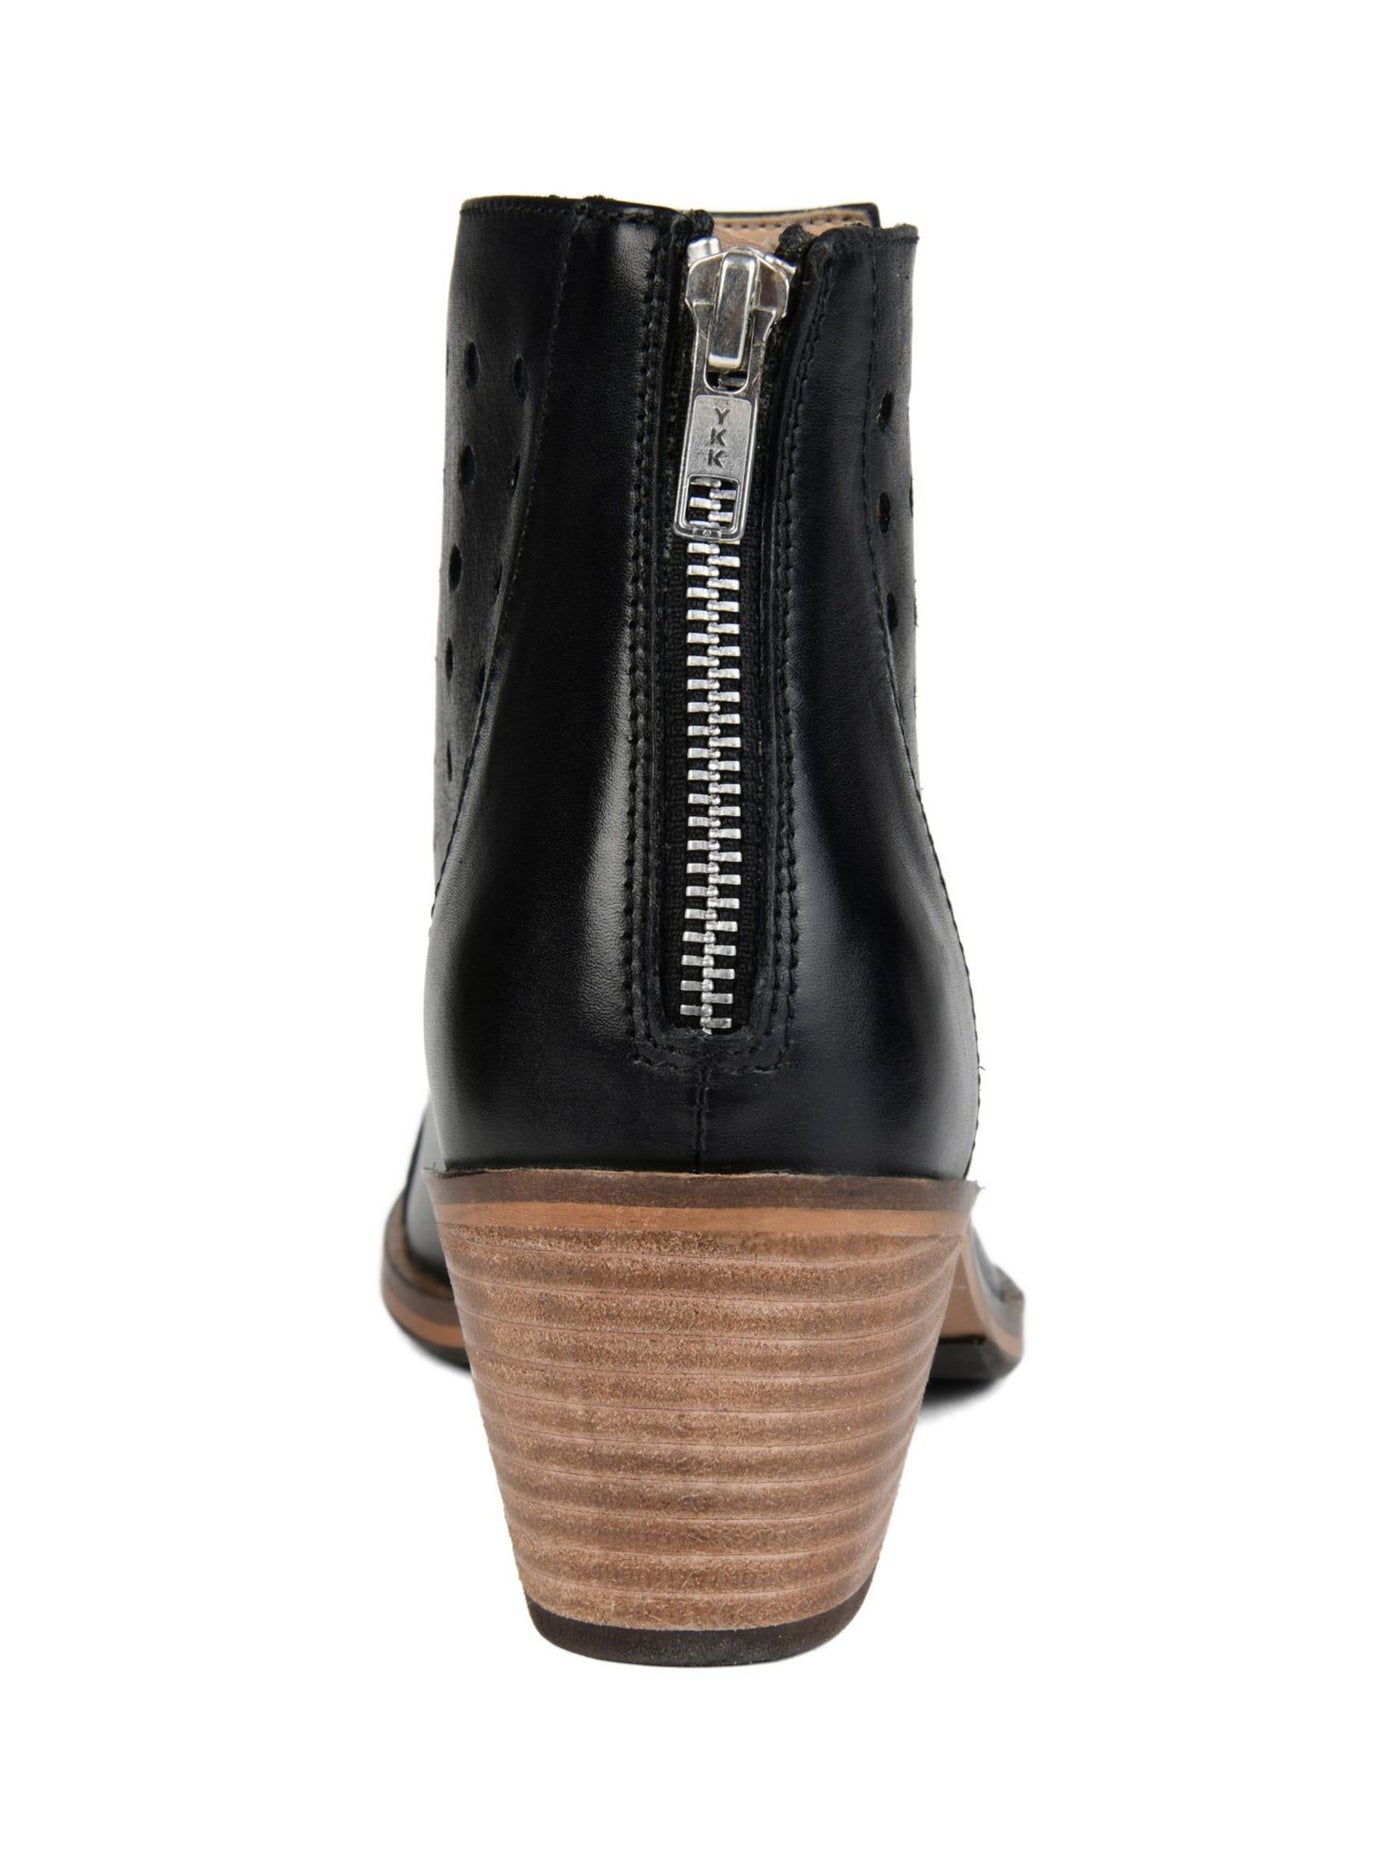 JOURNEE SIGNATURE Womens Black Stich And Pinhole Design Ulima Almond Toe Block Heel Zip-Up Booties 6.5